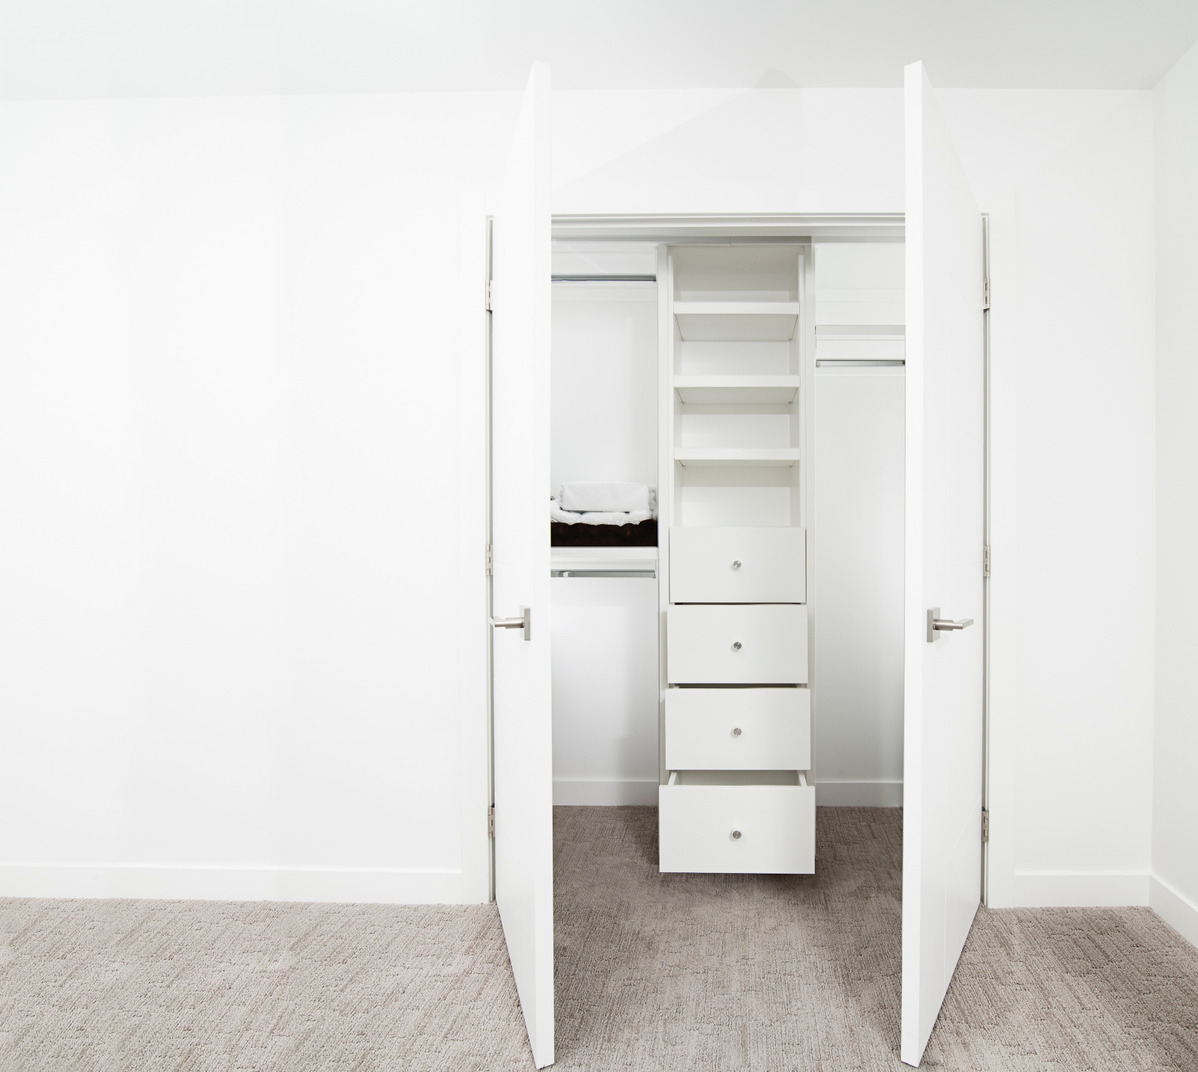 Background of white wardrobe in white room